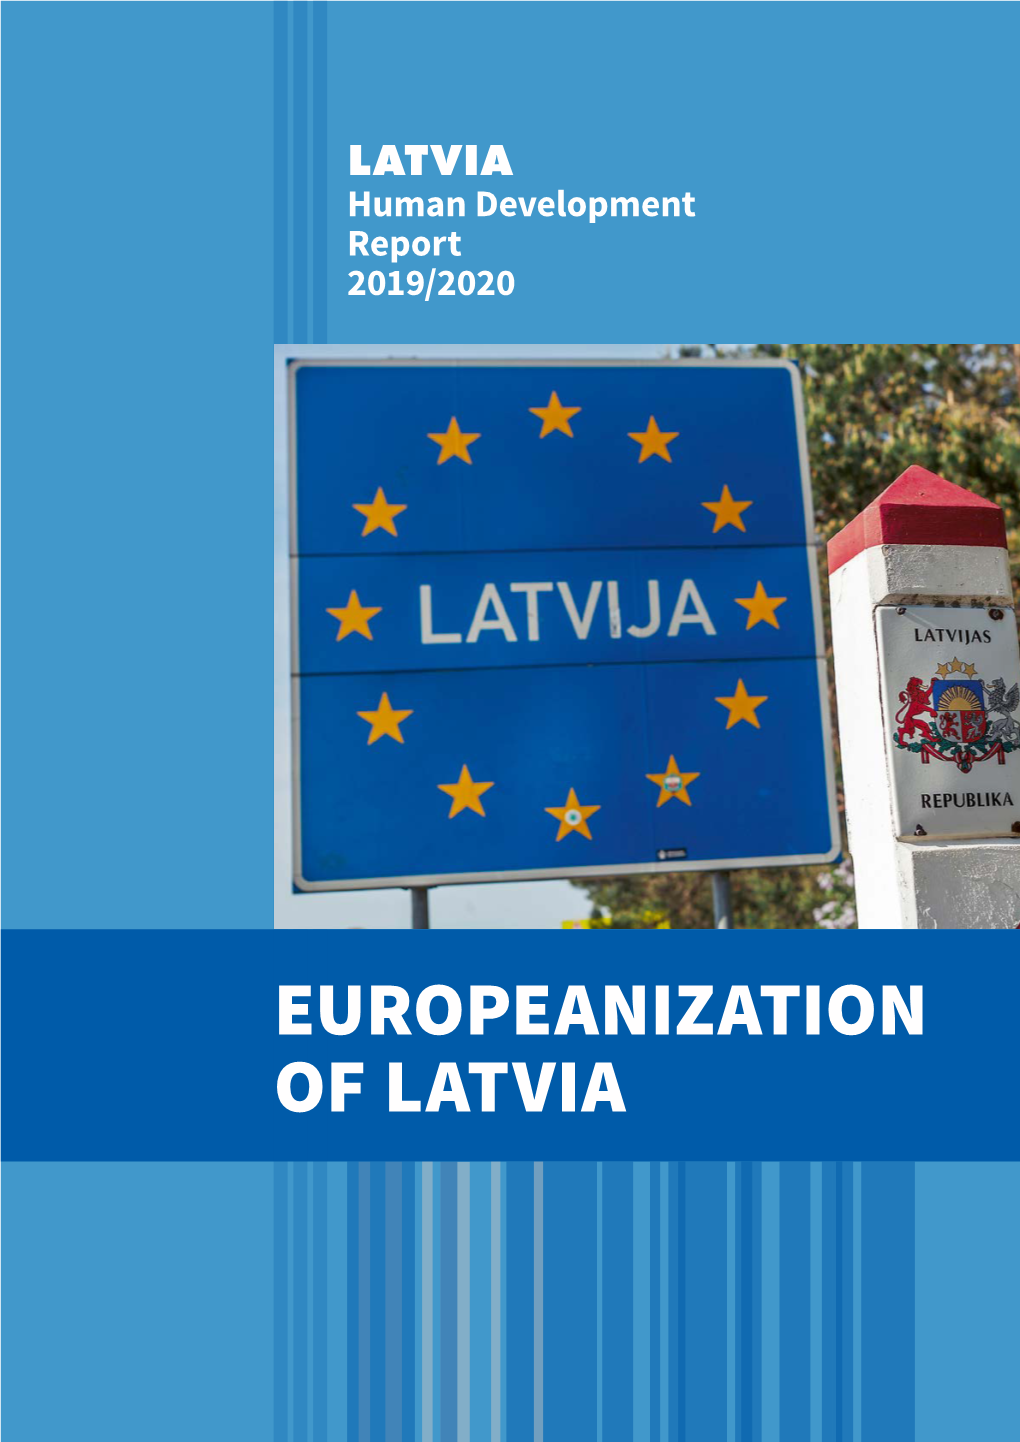 2019/2020 LATVIA Human Development Report